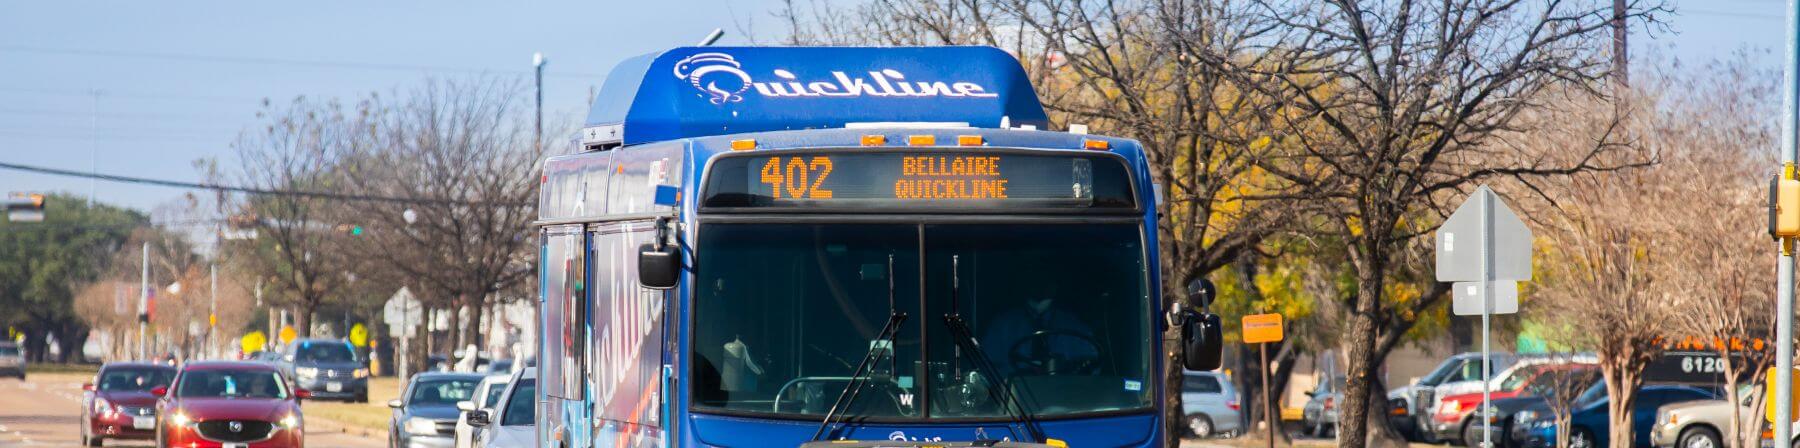 402 Bellaire Quickline bus